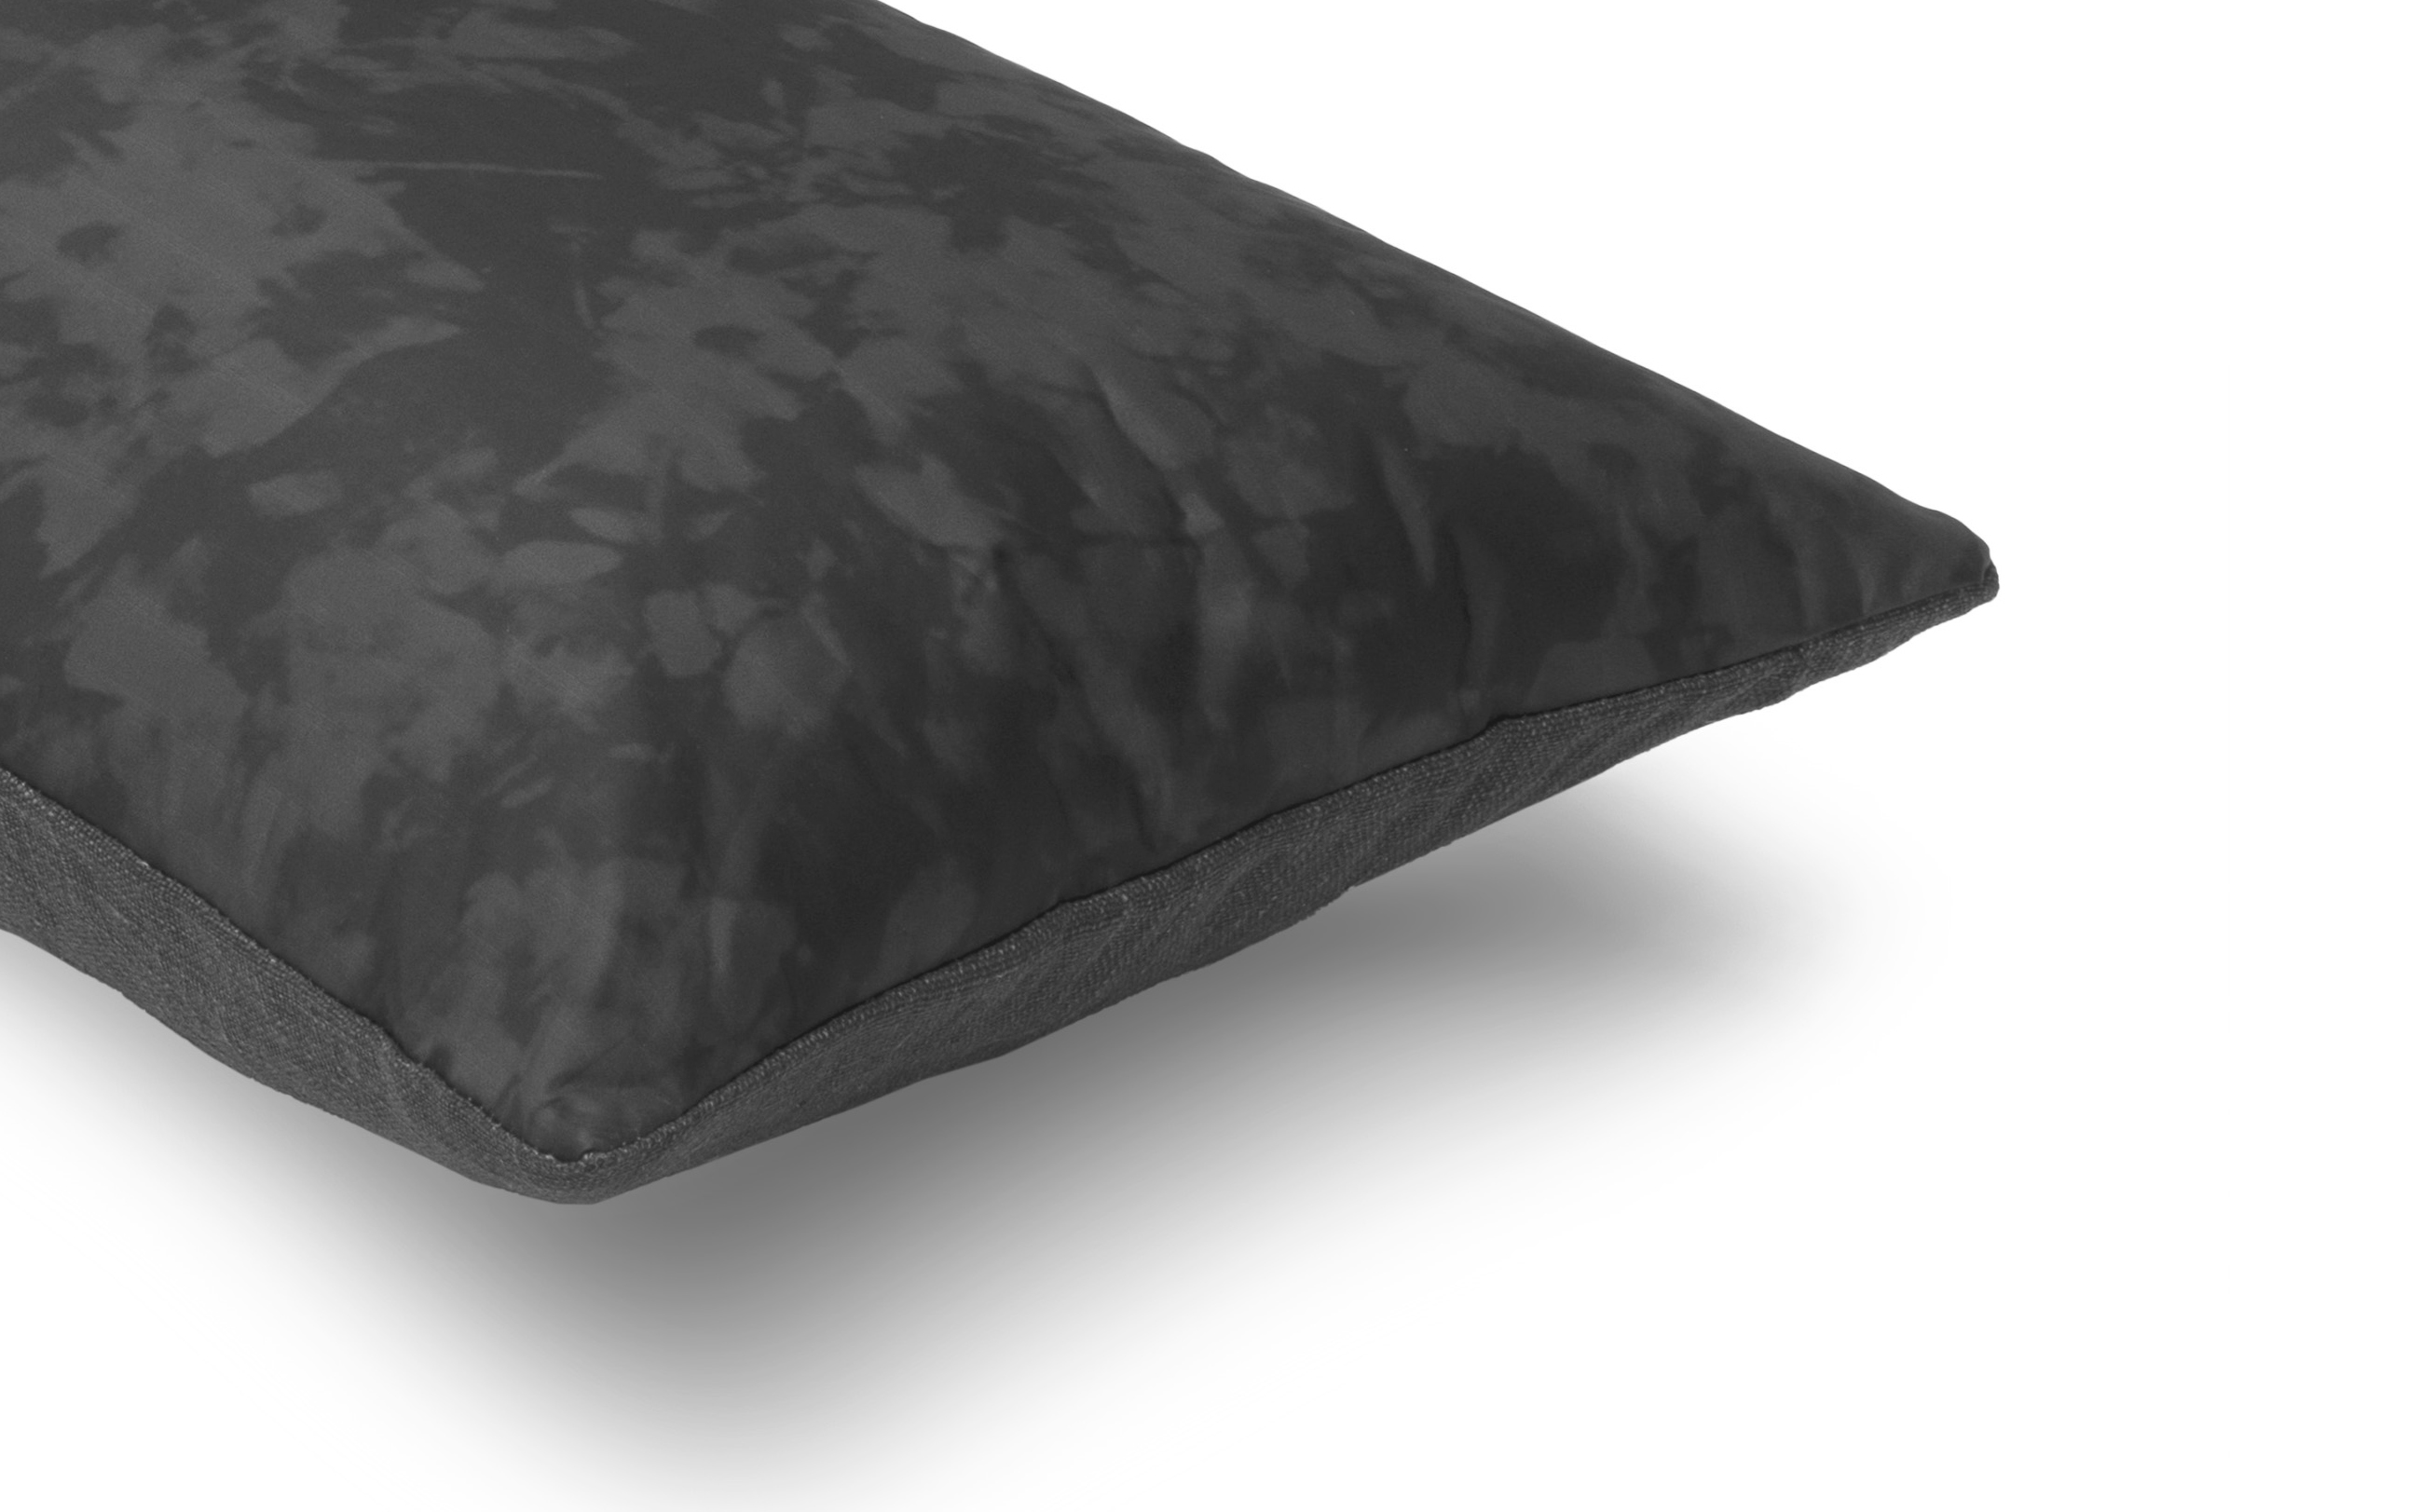 MrsMe cushion Foliage Black detail 1920x1200